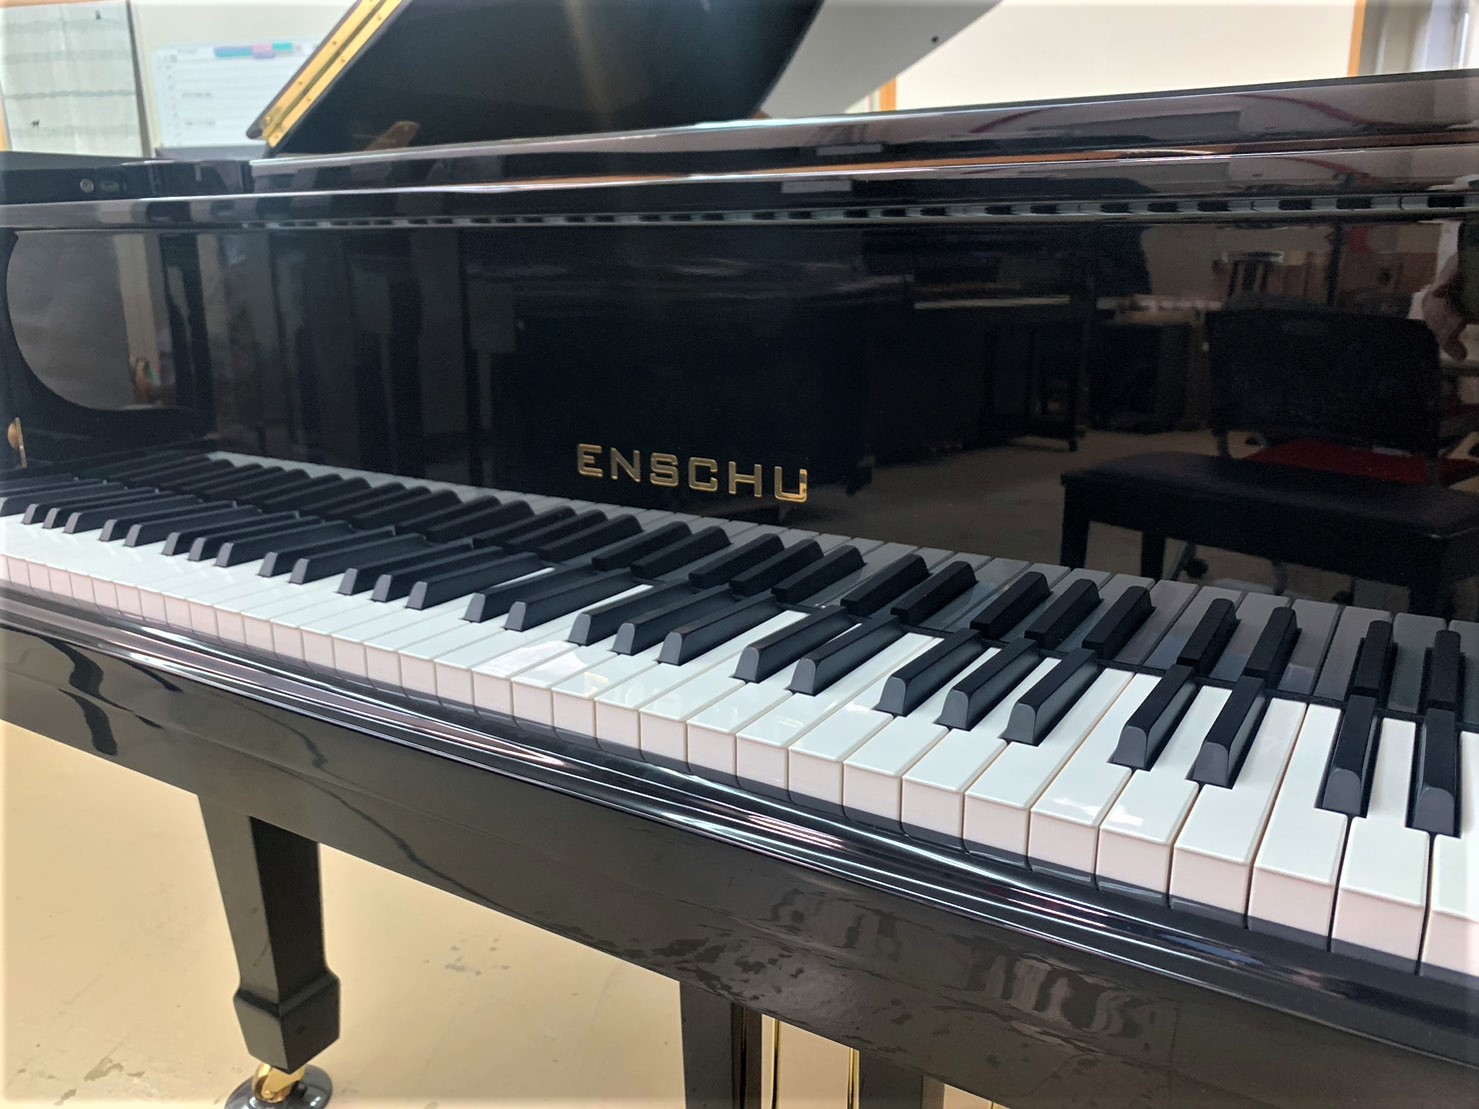 ENSCHU（エンシュウ） E150